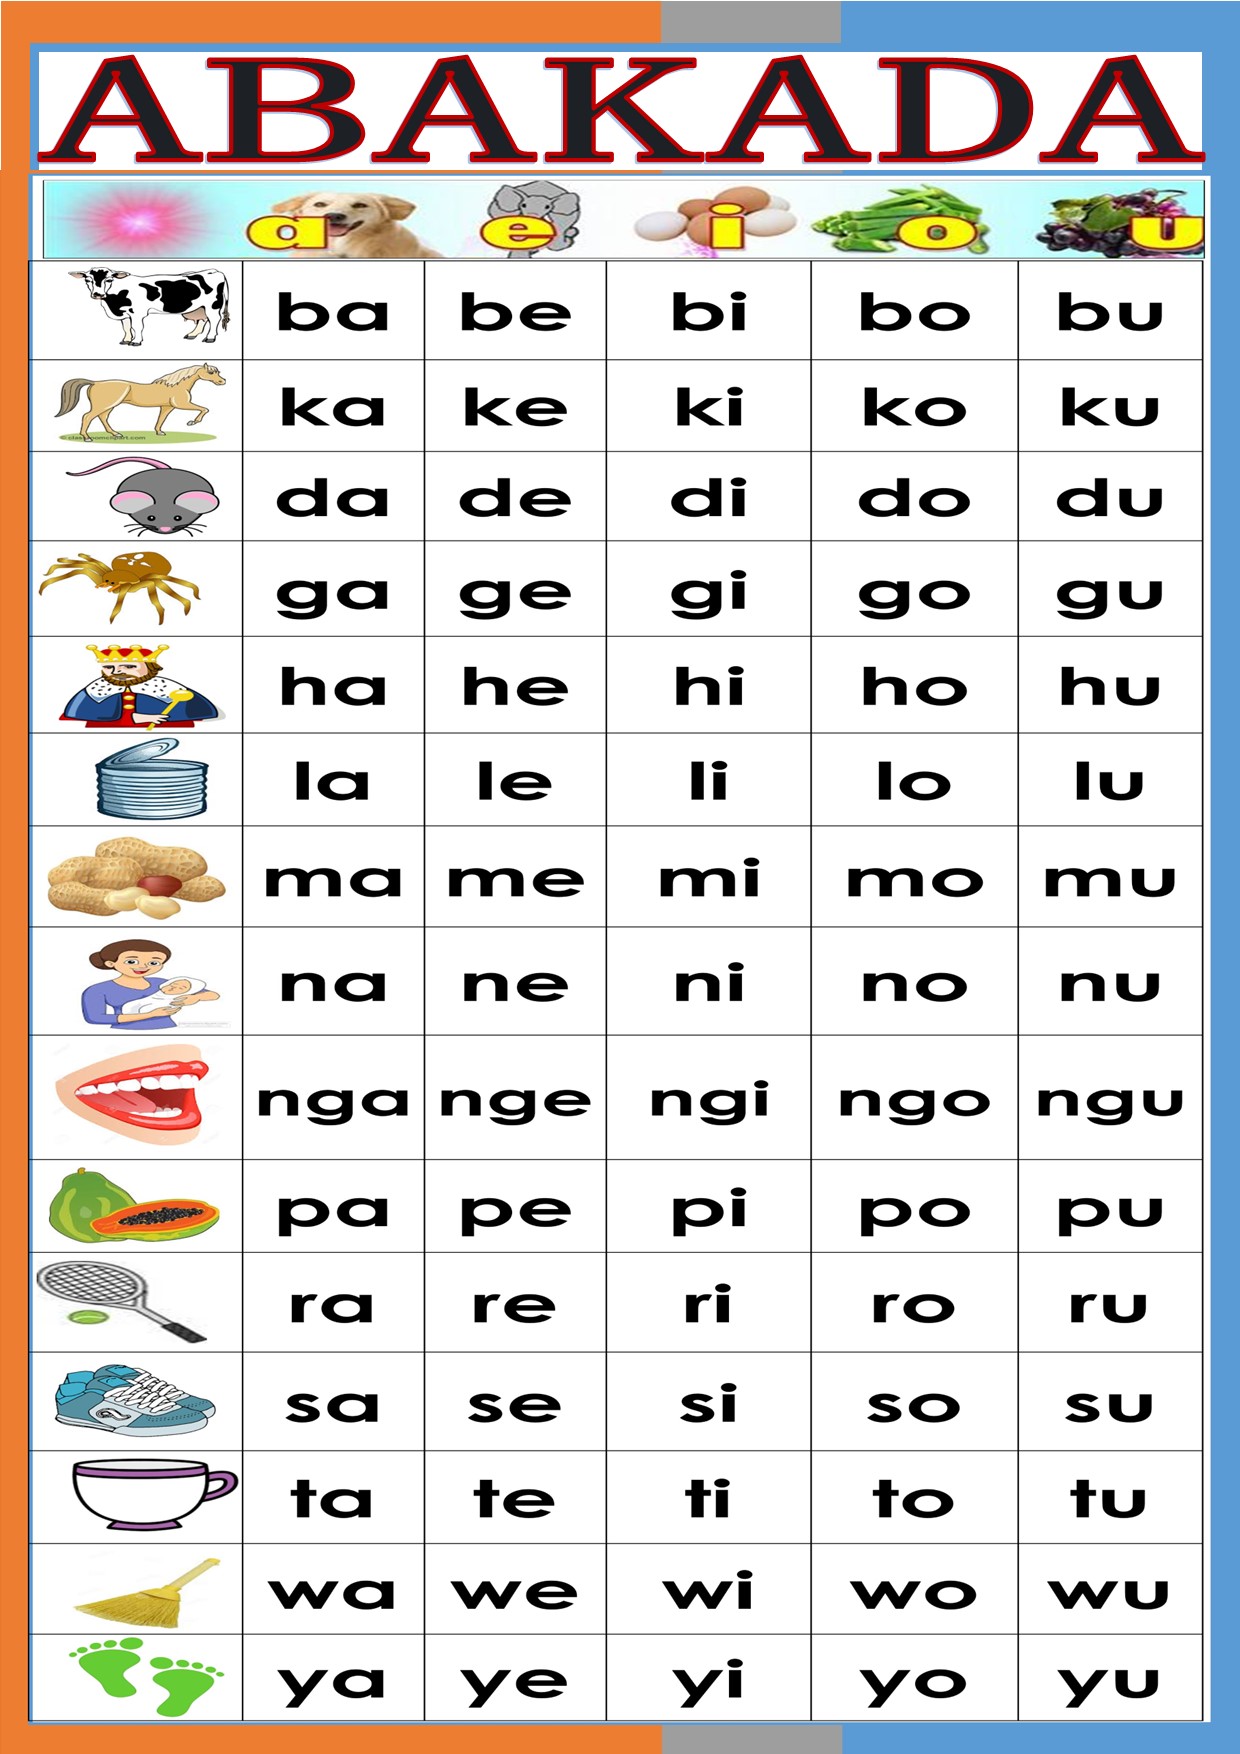 Abakada Laminated Reading Chart For Toddlers And Preschoolers Filipino